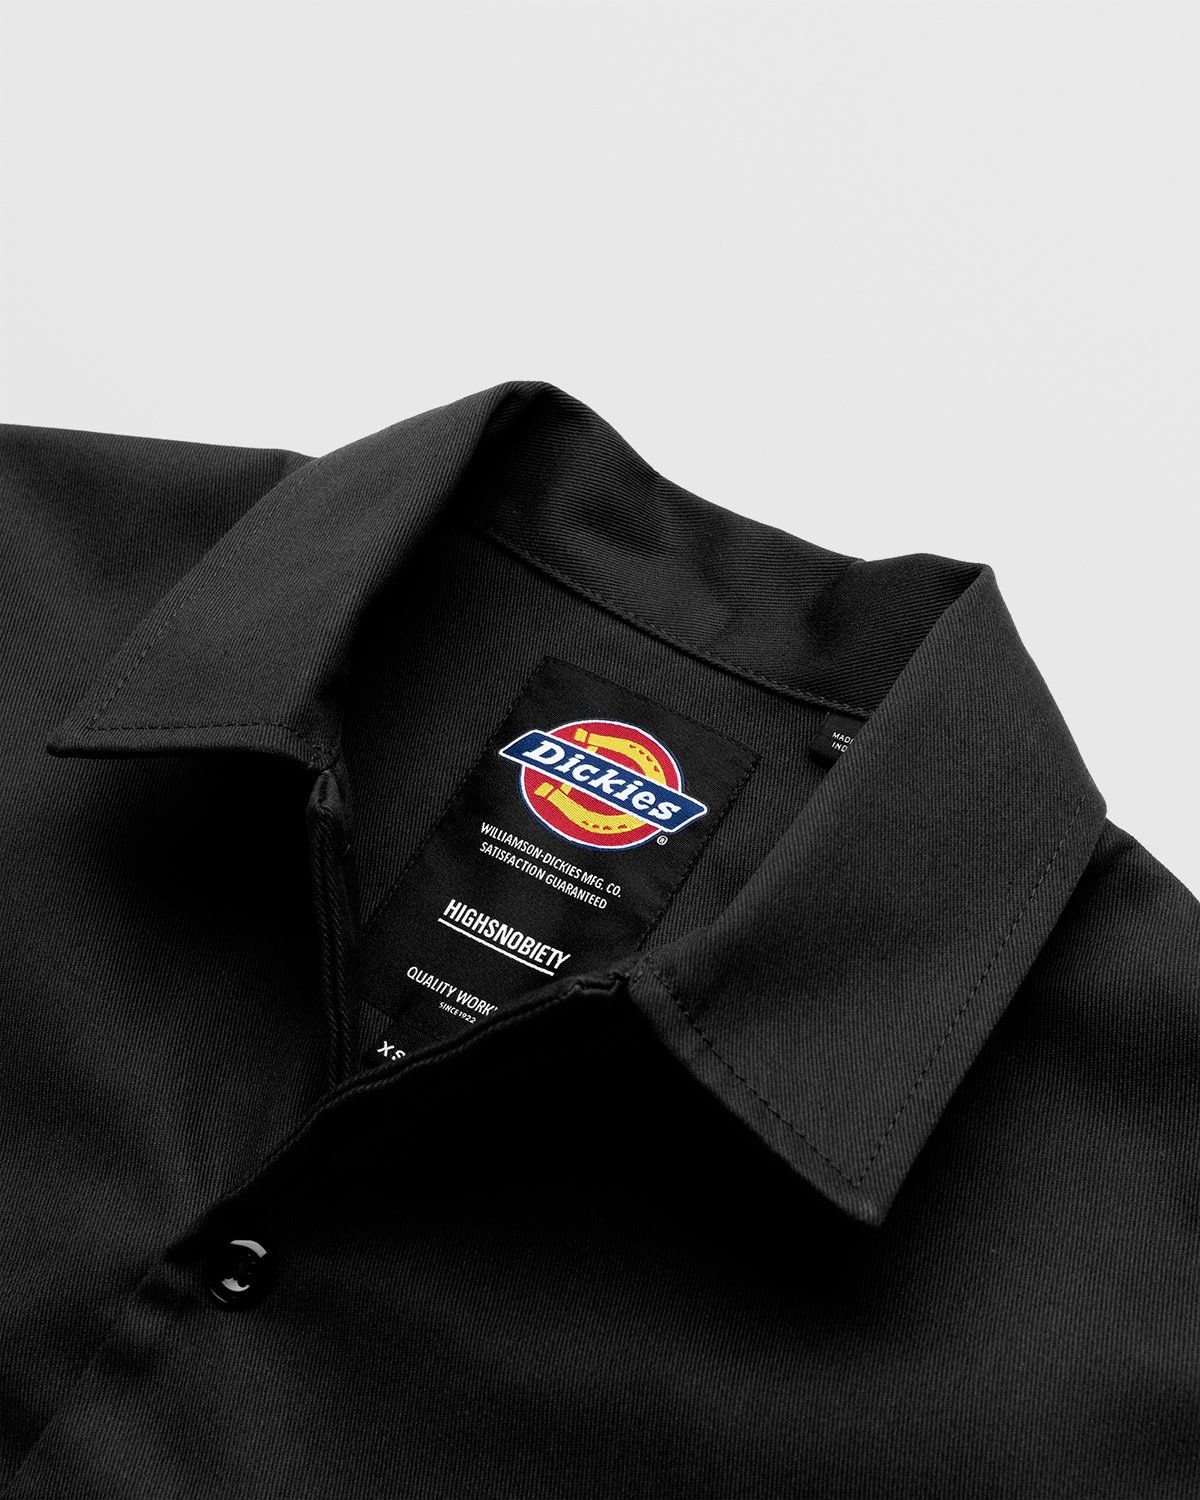 Highsnobiety x Dickies – Service Shirt Black - Shirts - Black - Image 3